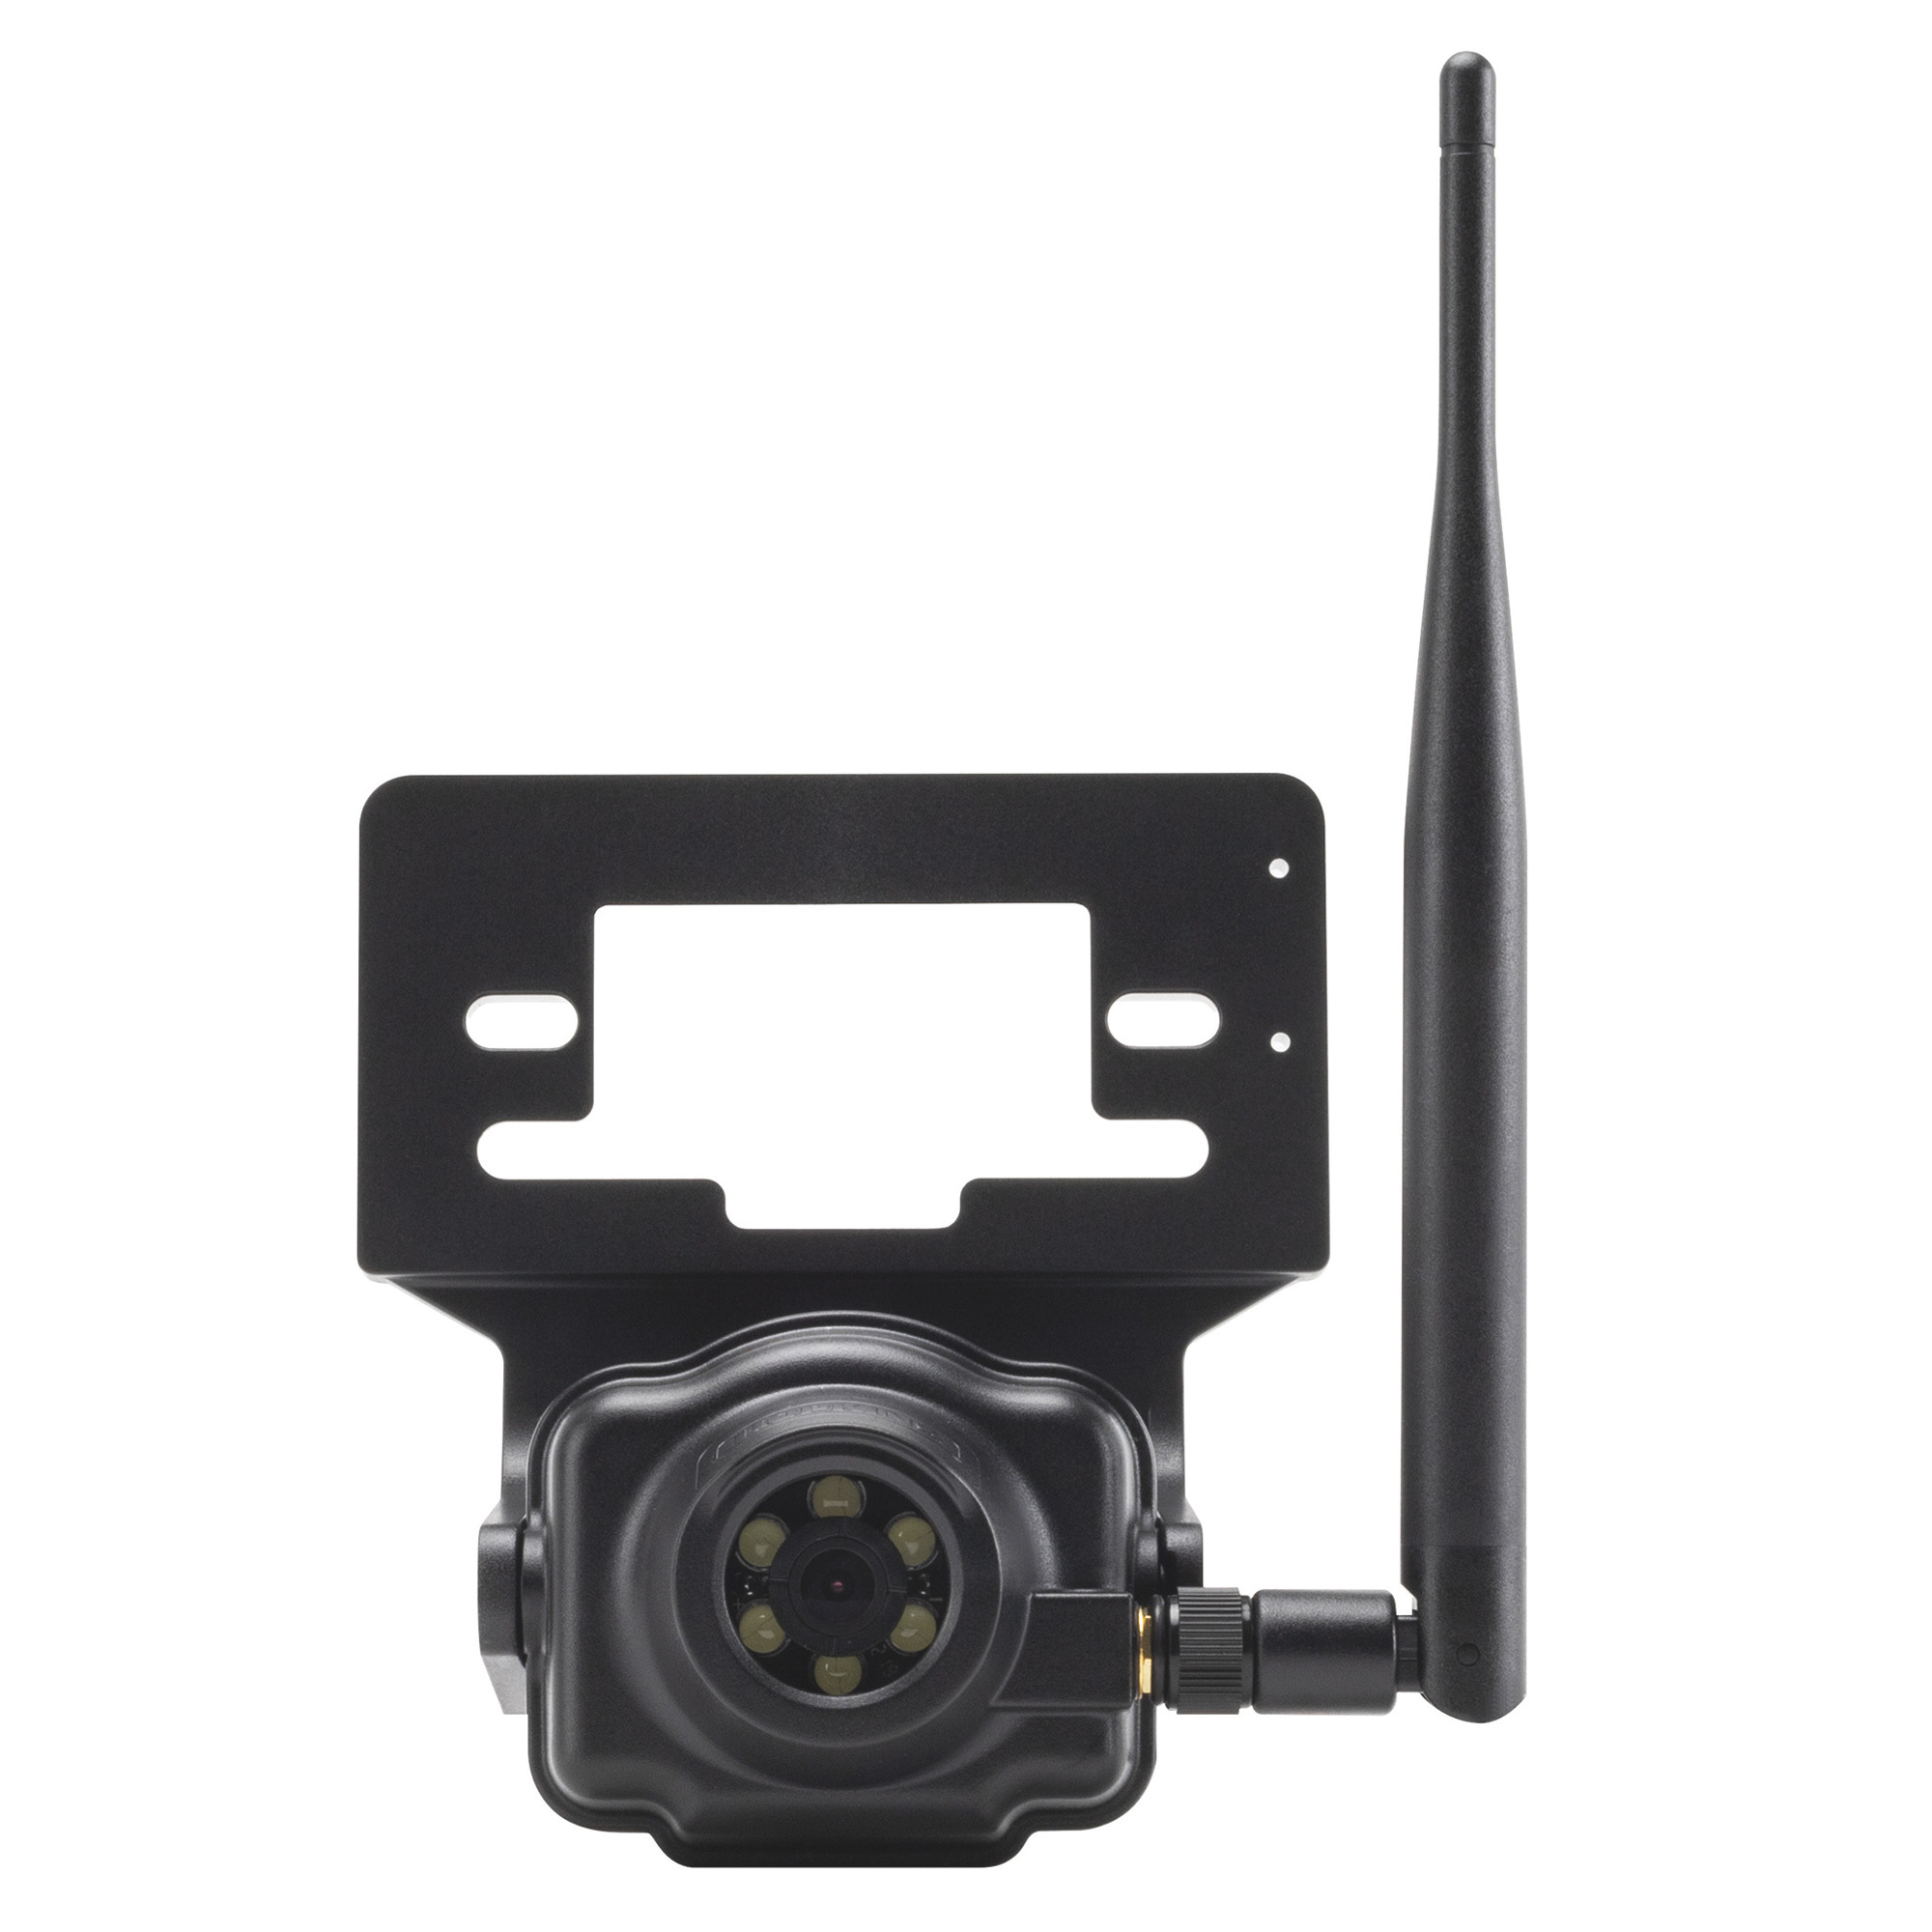 Hopkins Towing Solutions vueSMART Trailer Camera, Model 50050